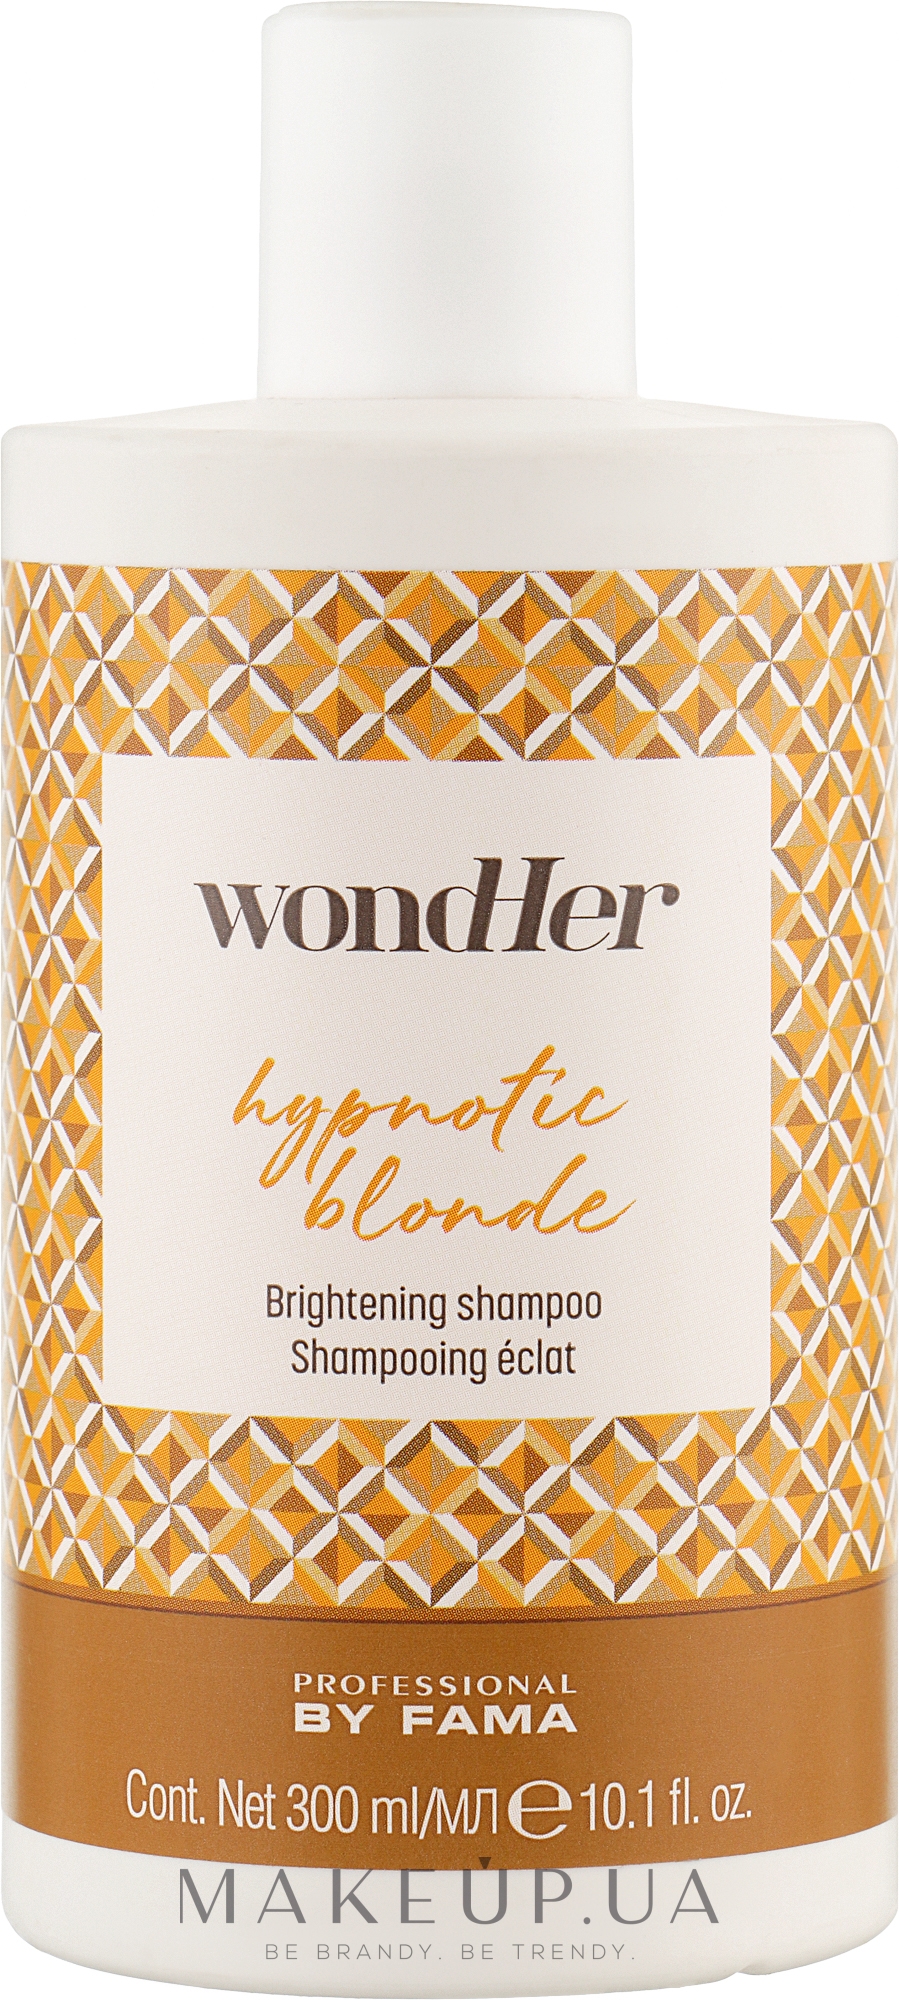 Шампунь для блестящего блонда - Professional By Fama Wondher Hypnotic Blonde Brightening Shampoo — фото 300ml